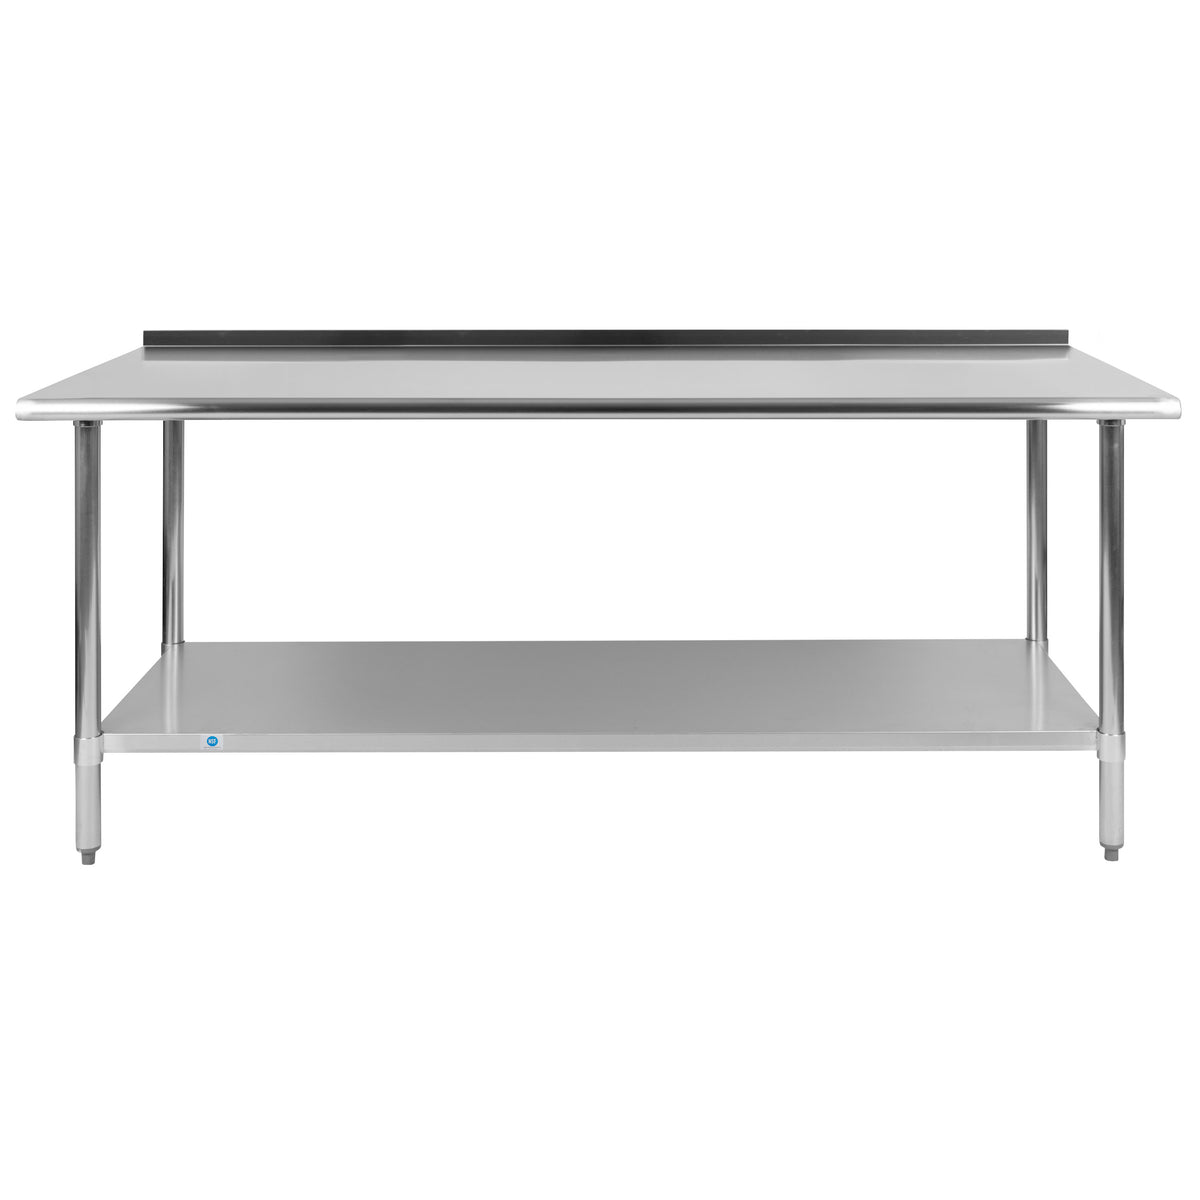 72"W x 30"D |#| Stainless Steel 18 Gauge Work Table with Backsplash and Shelf, NSF - 72"W x 30"D